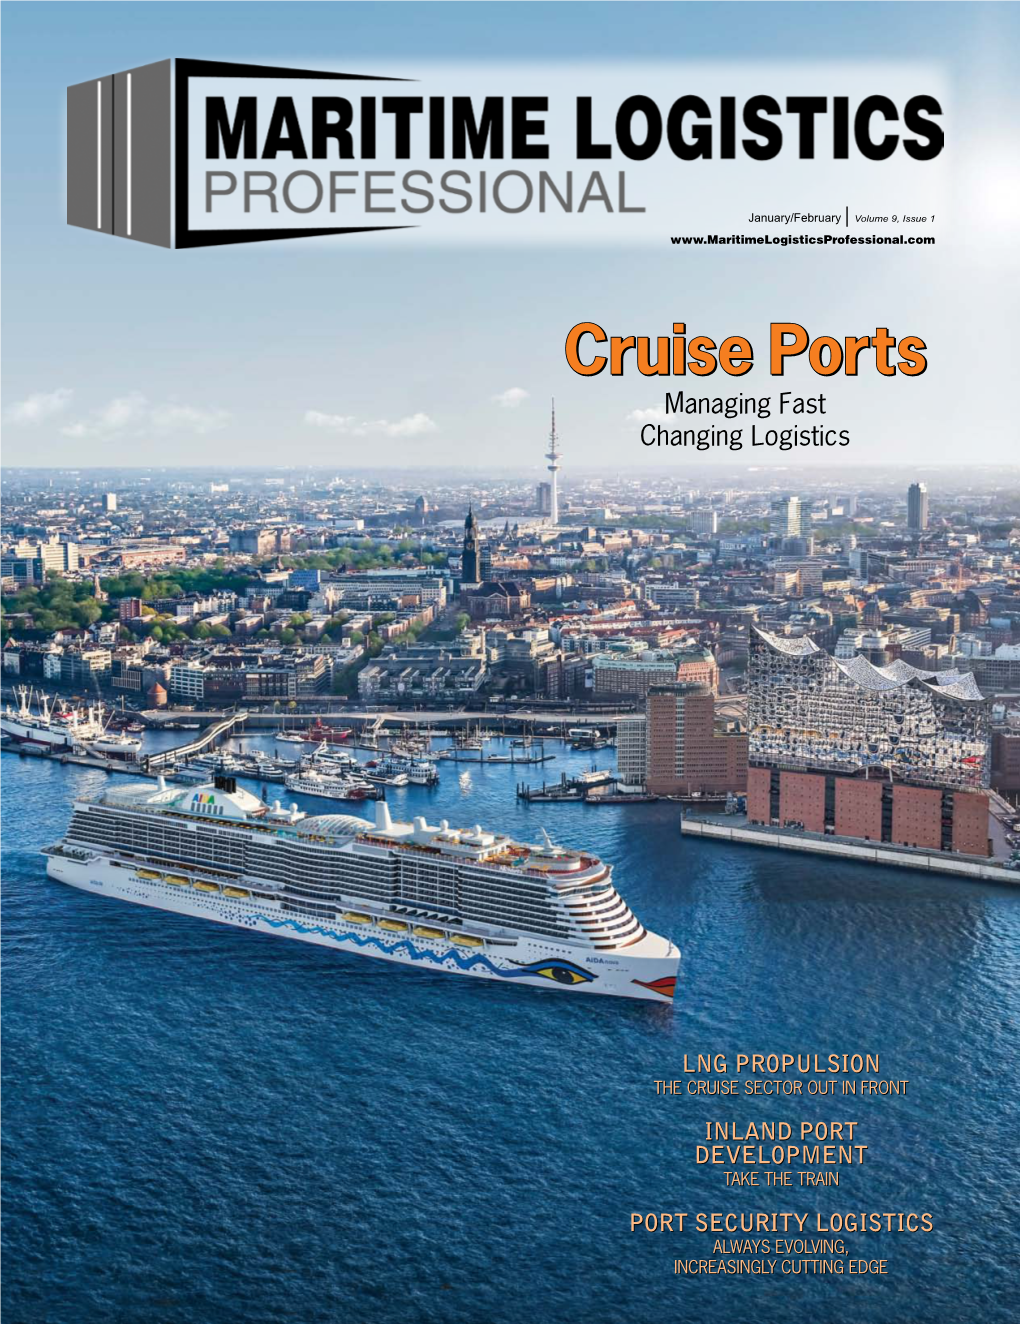 Cruise Ports Managing Fast Changing Logistics